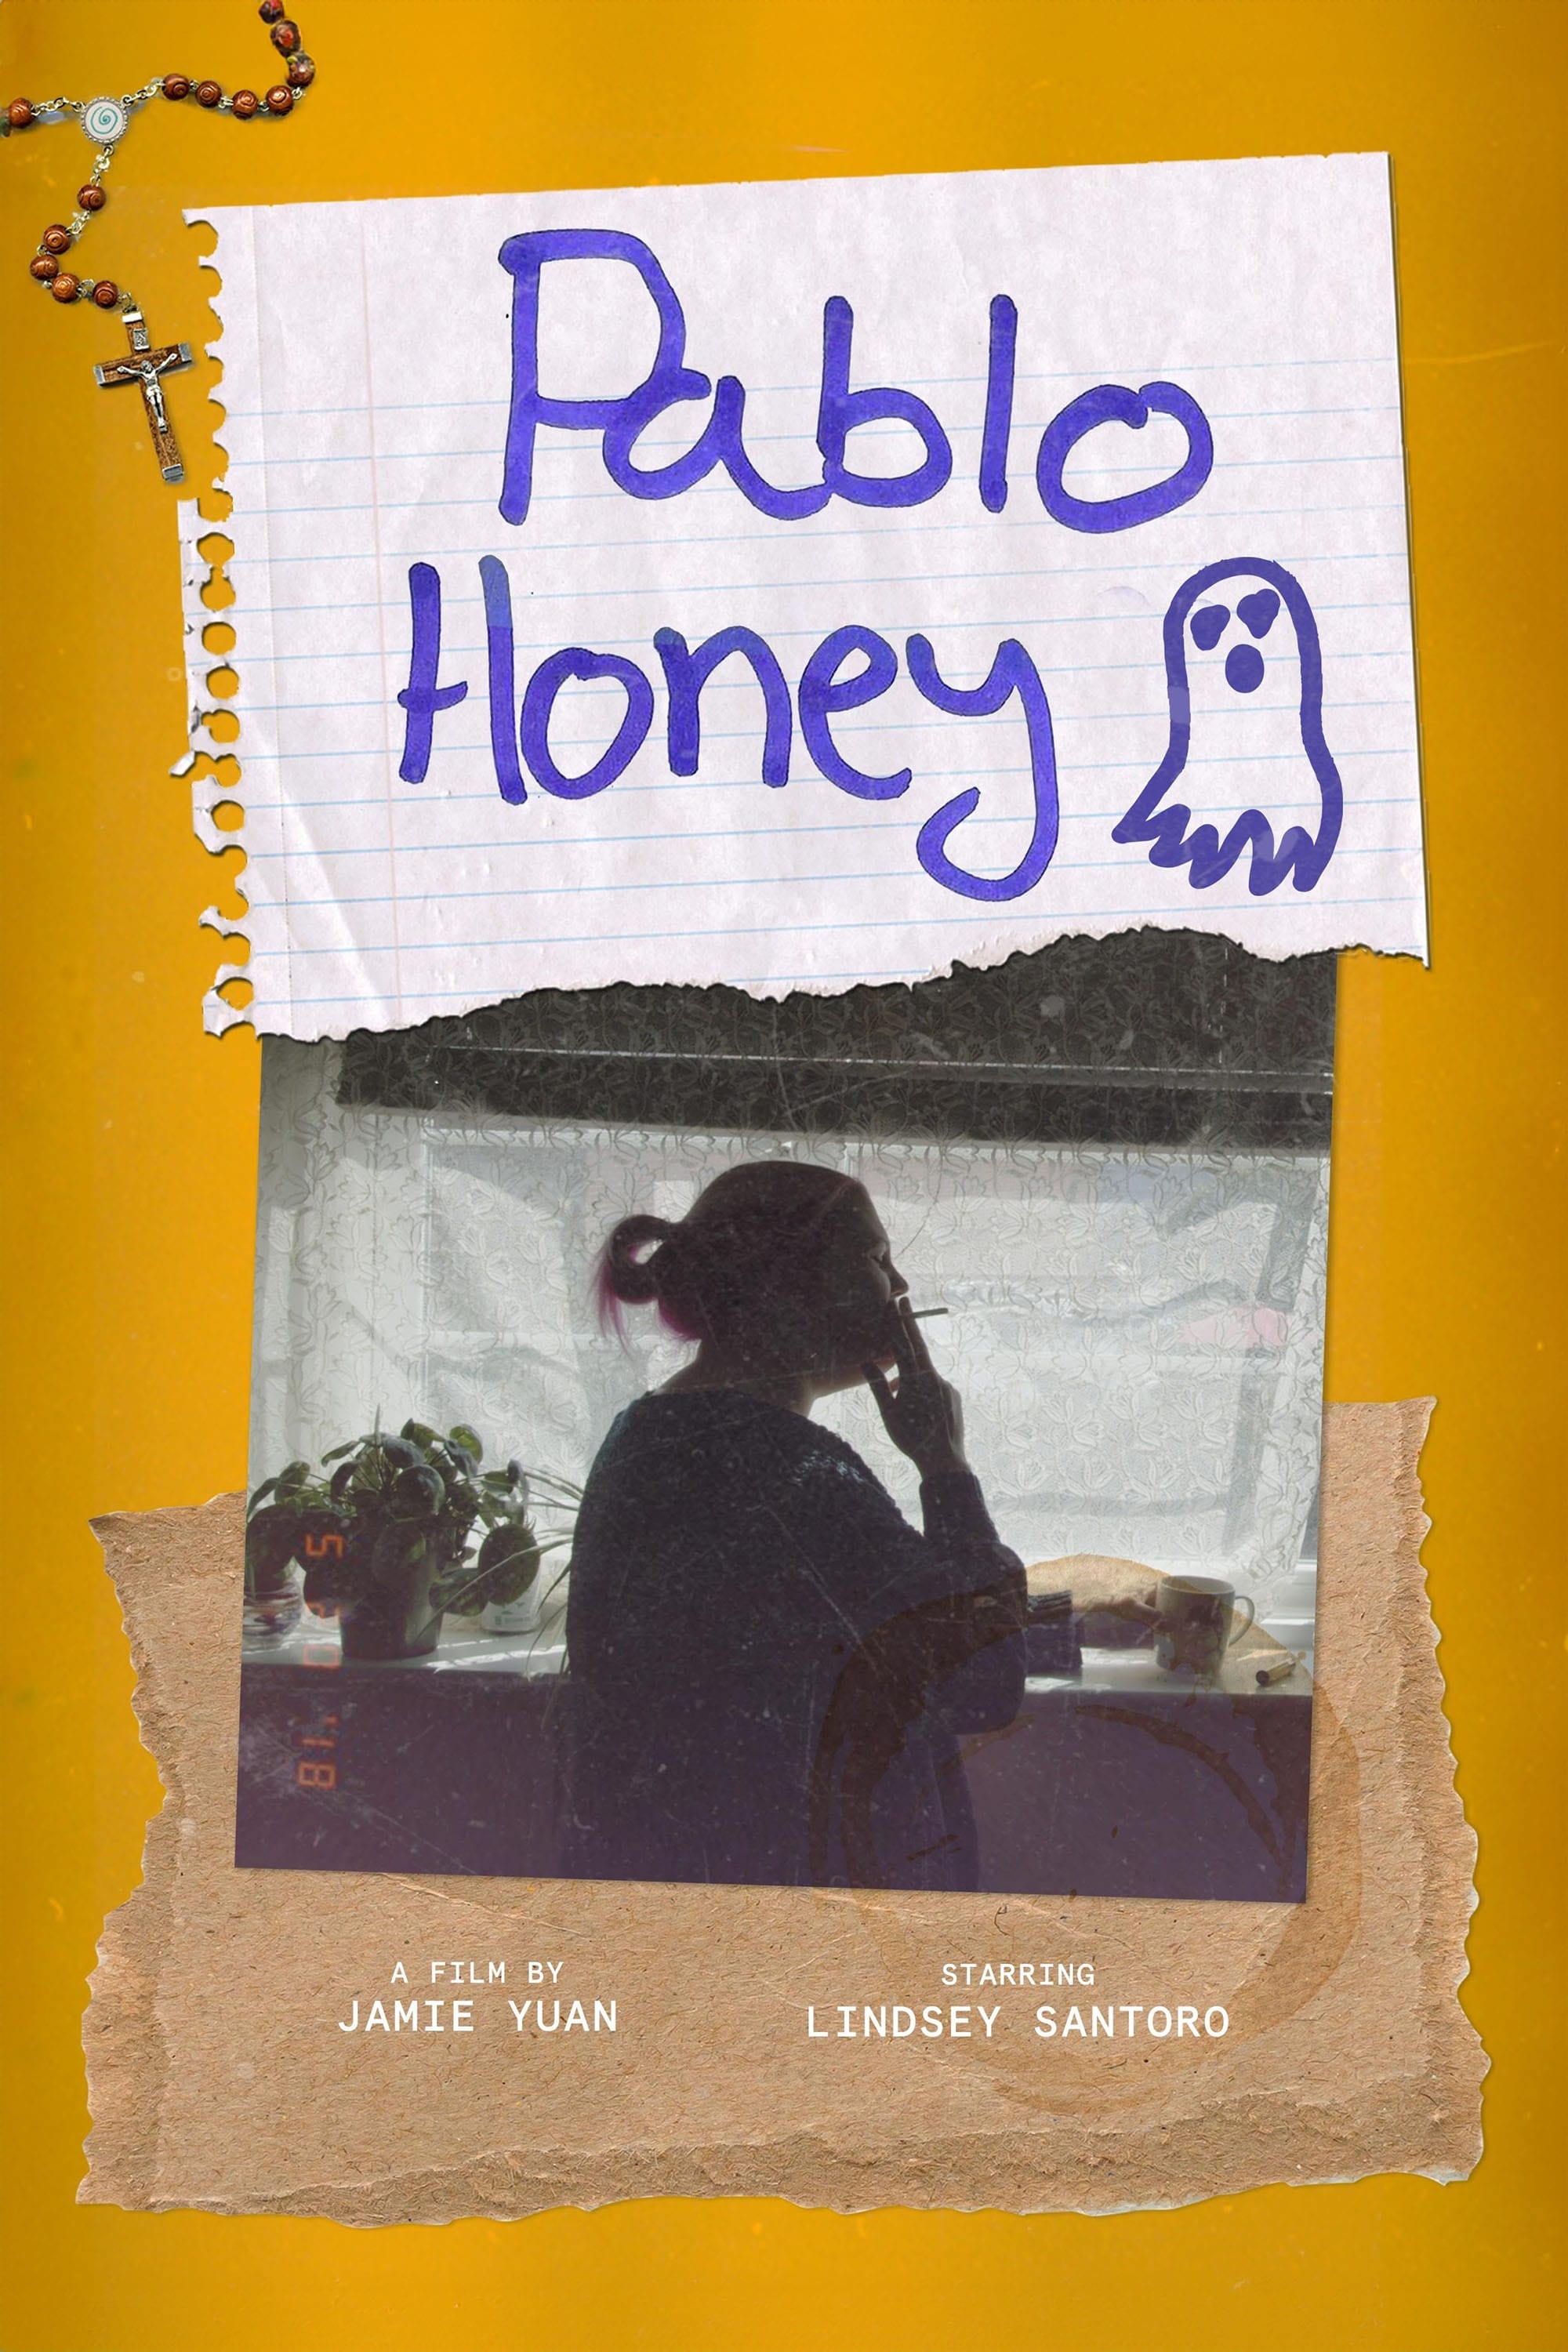 Pablo, Honey!